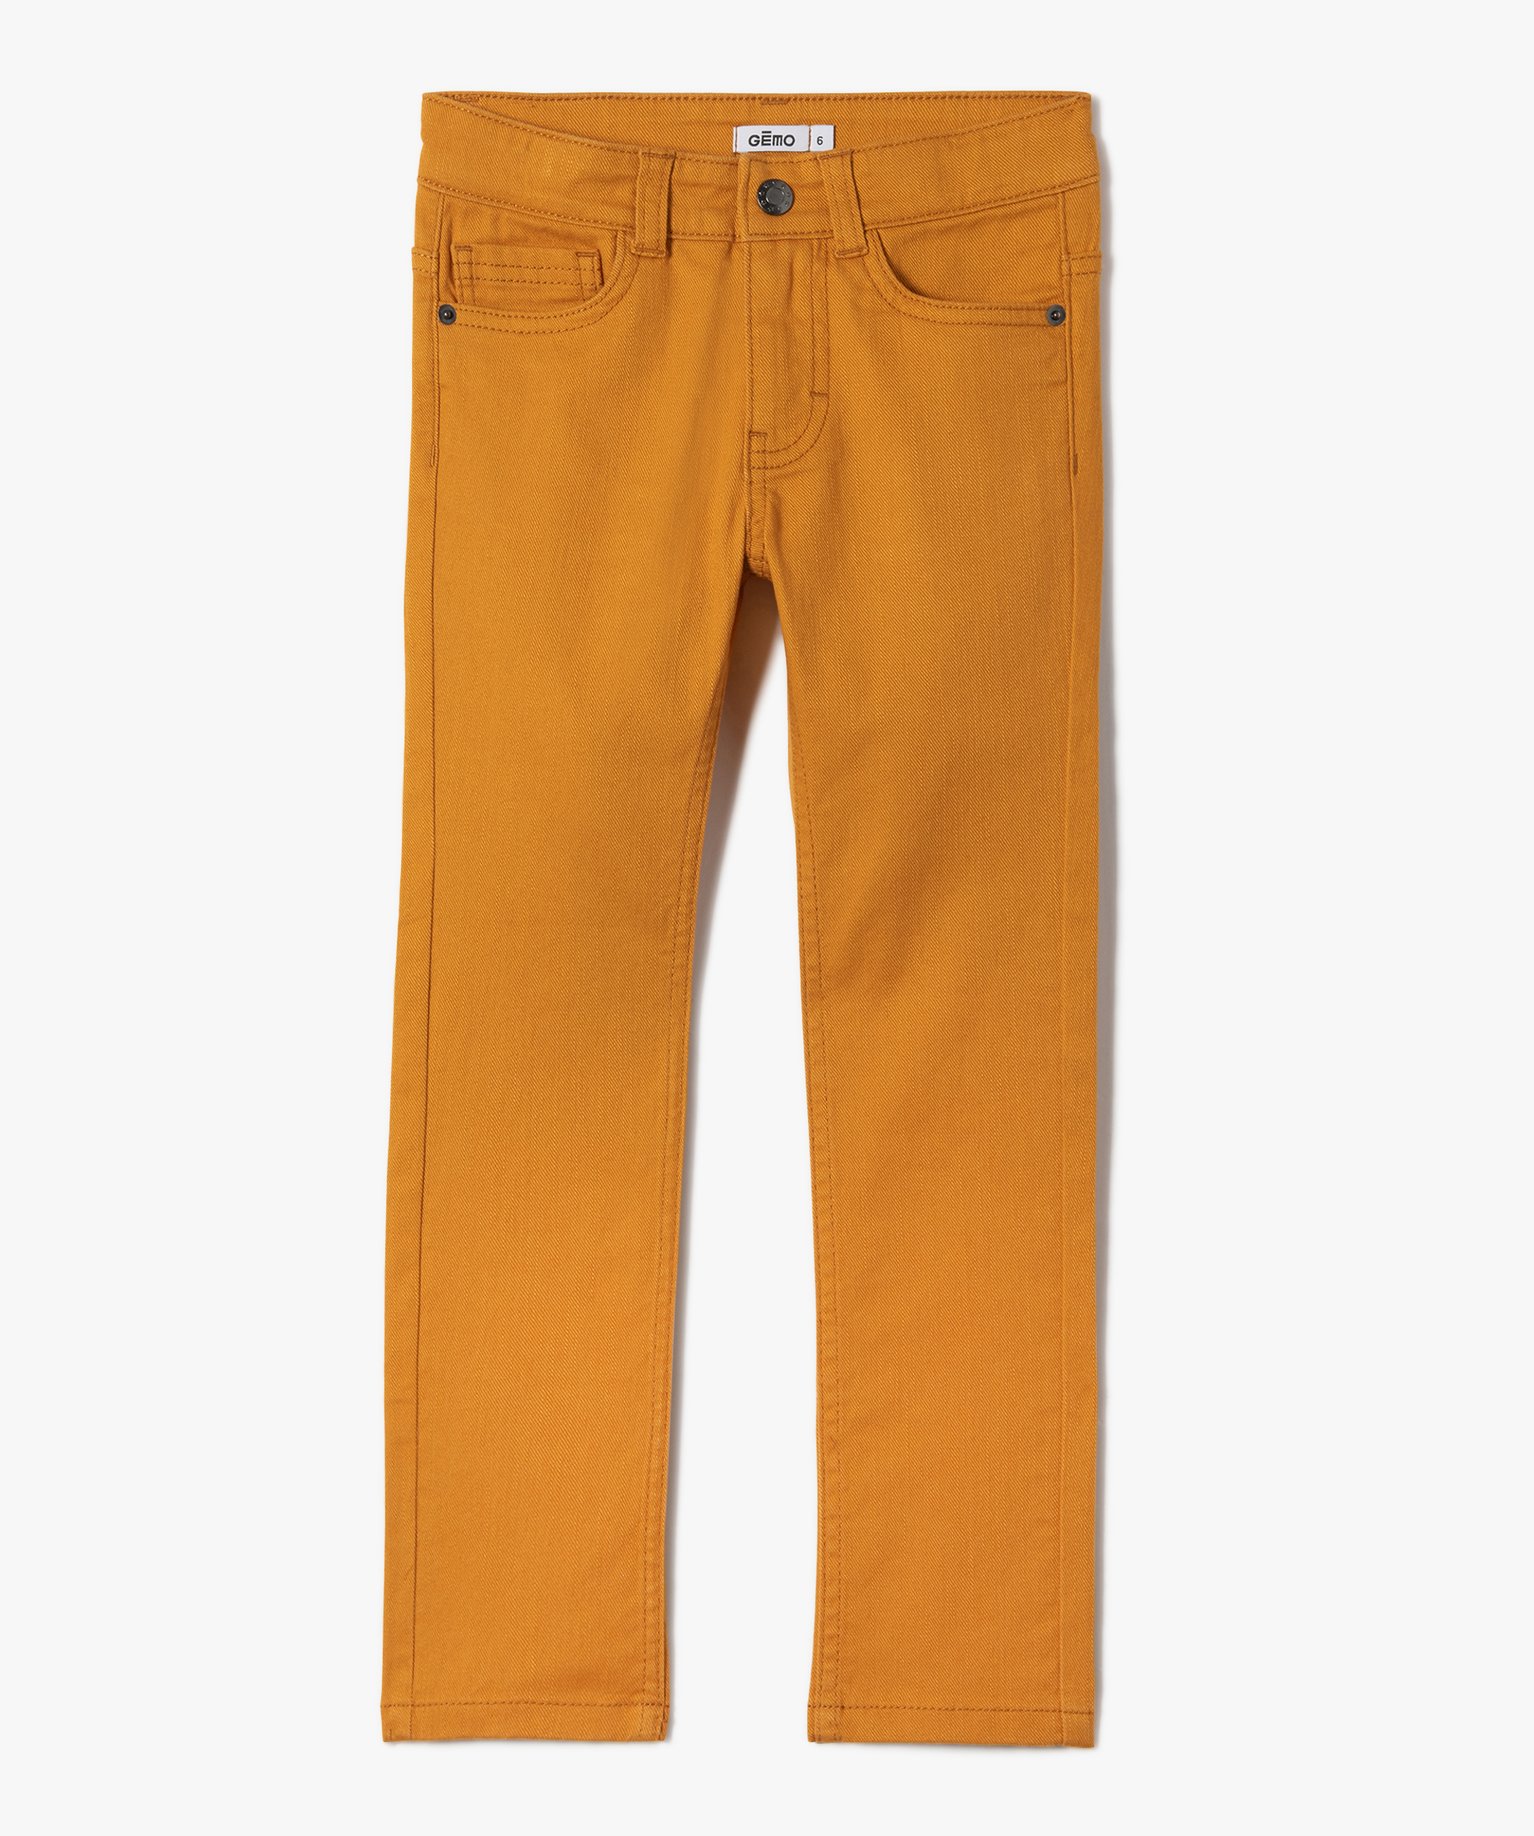 pantalon garcon uni coupe slim extensible jaune pantalons